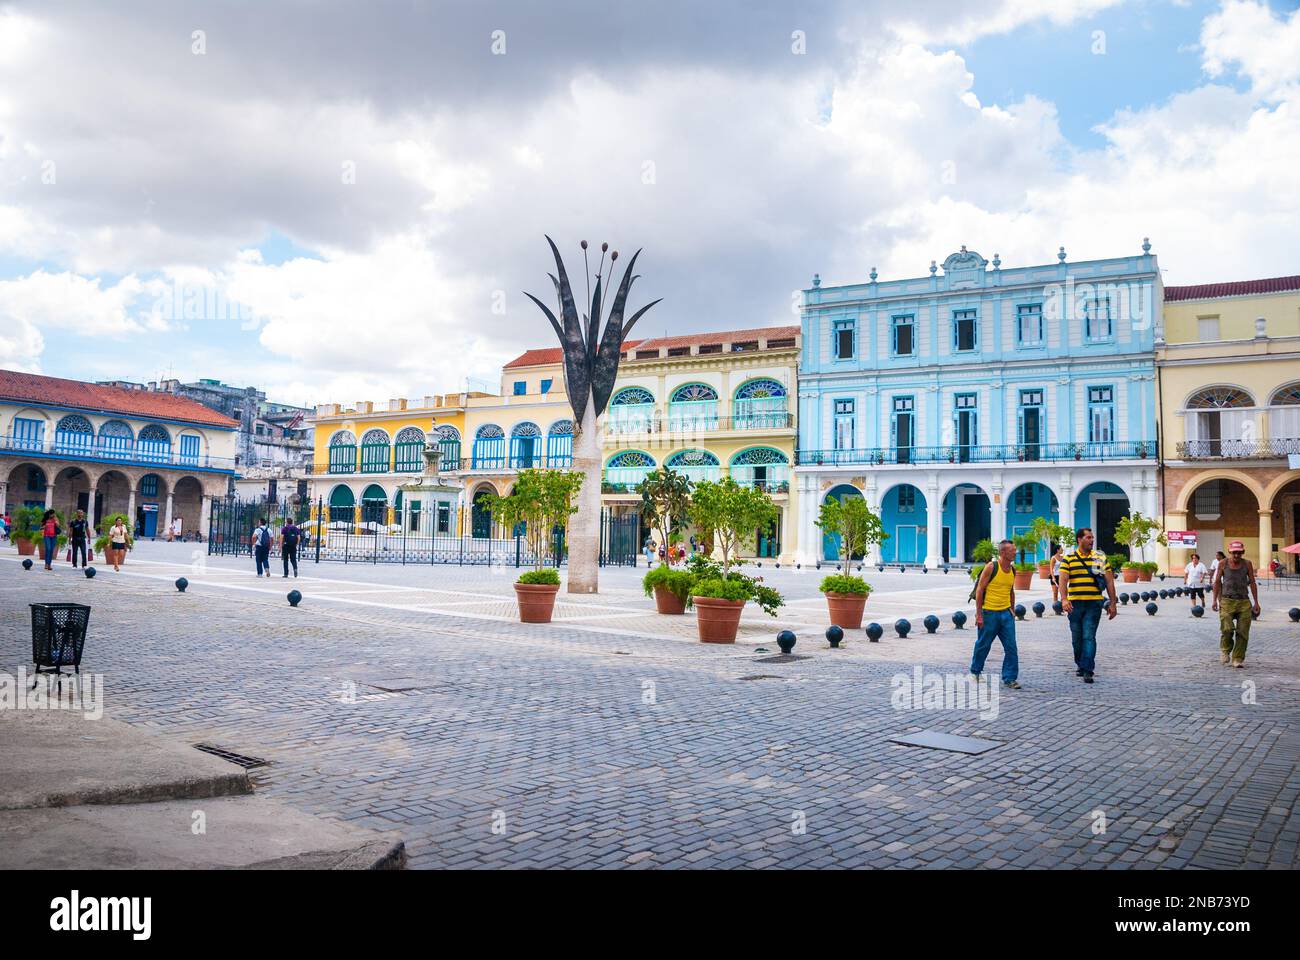 The Plaza Vieja of Havana (old Havana square) is a popular tourist stop in central Havana Cuba Stock Photo